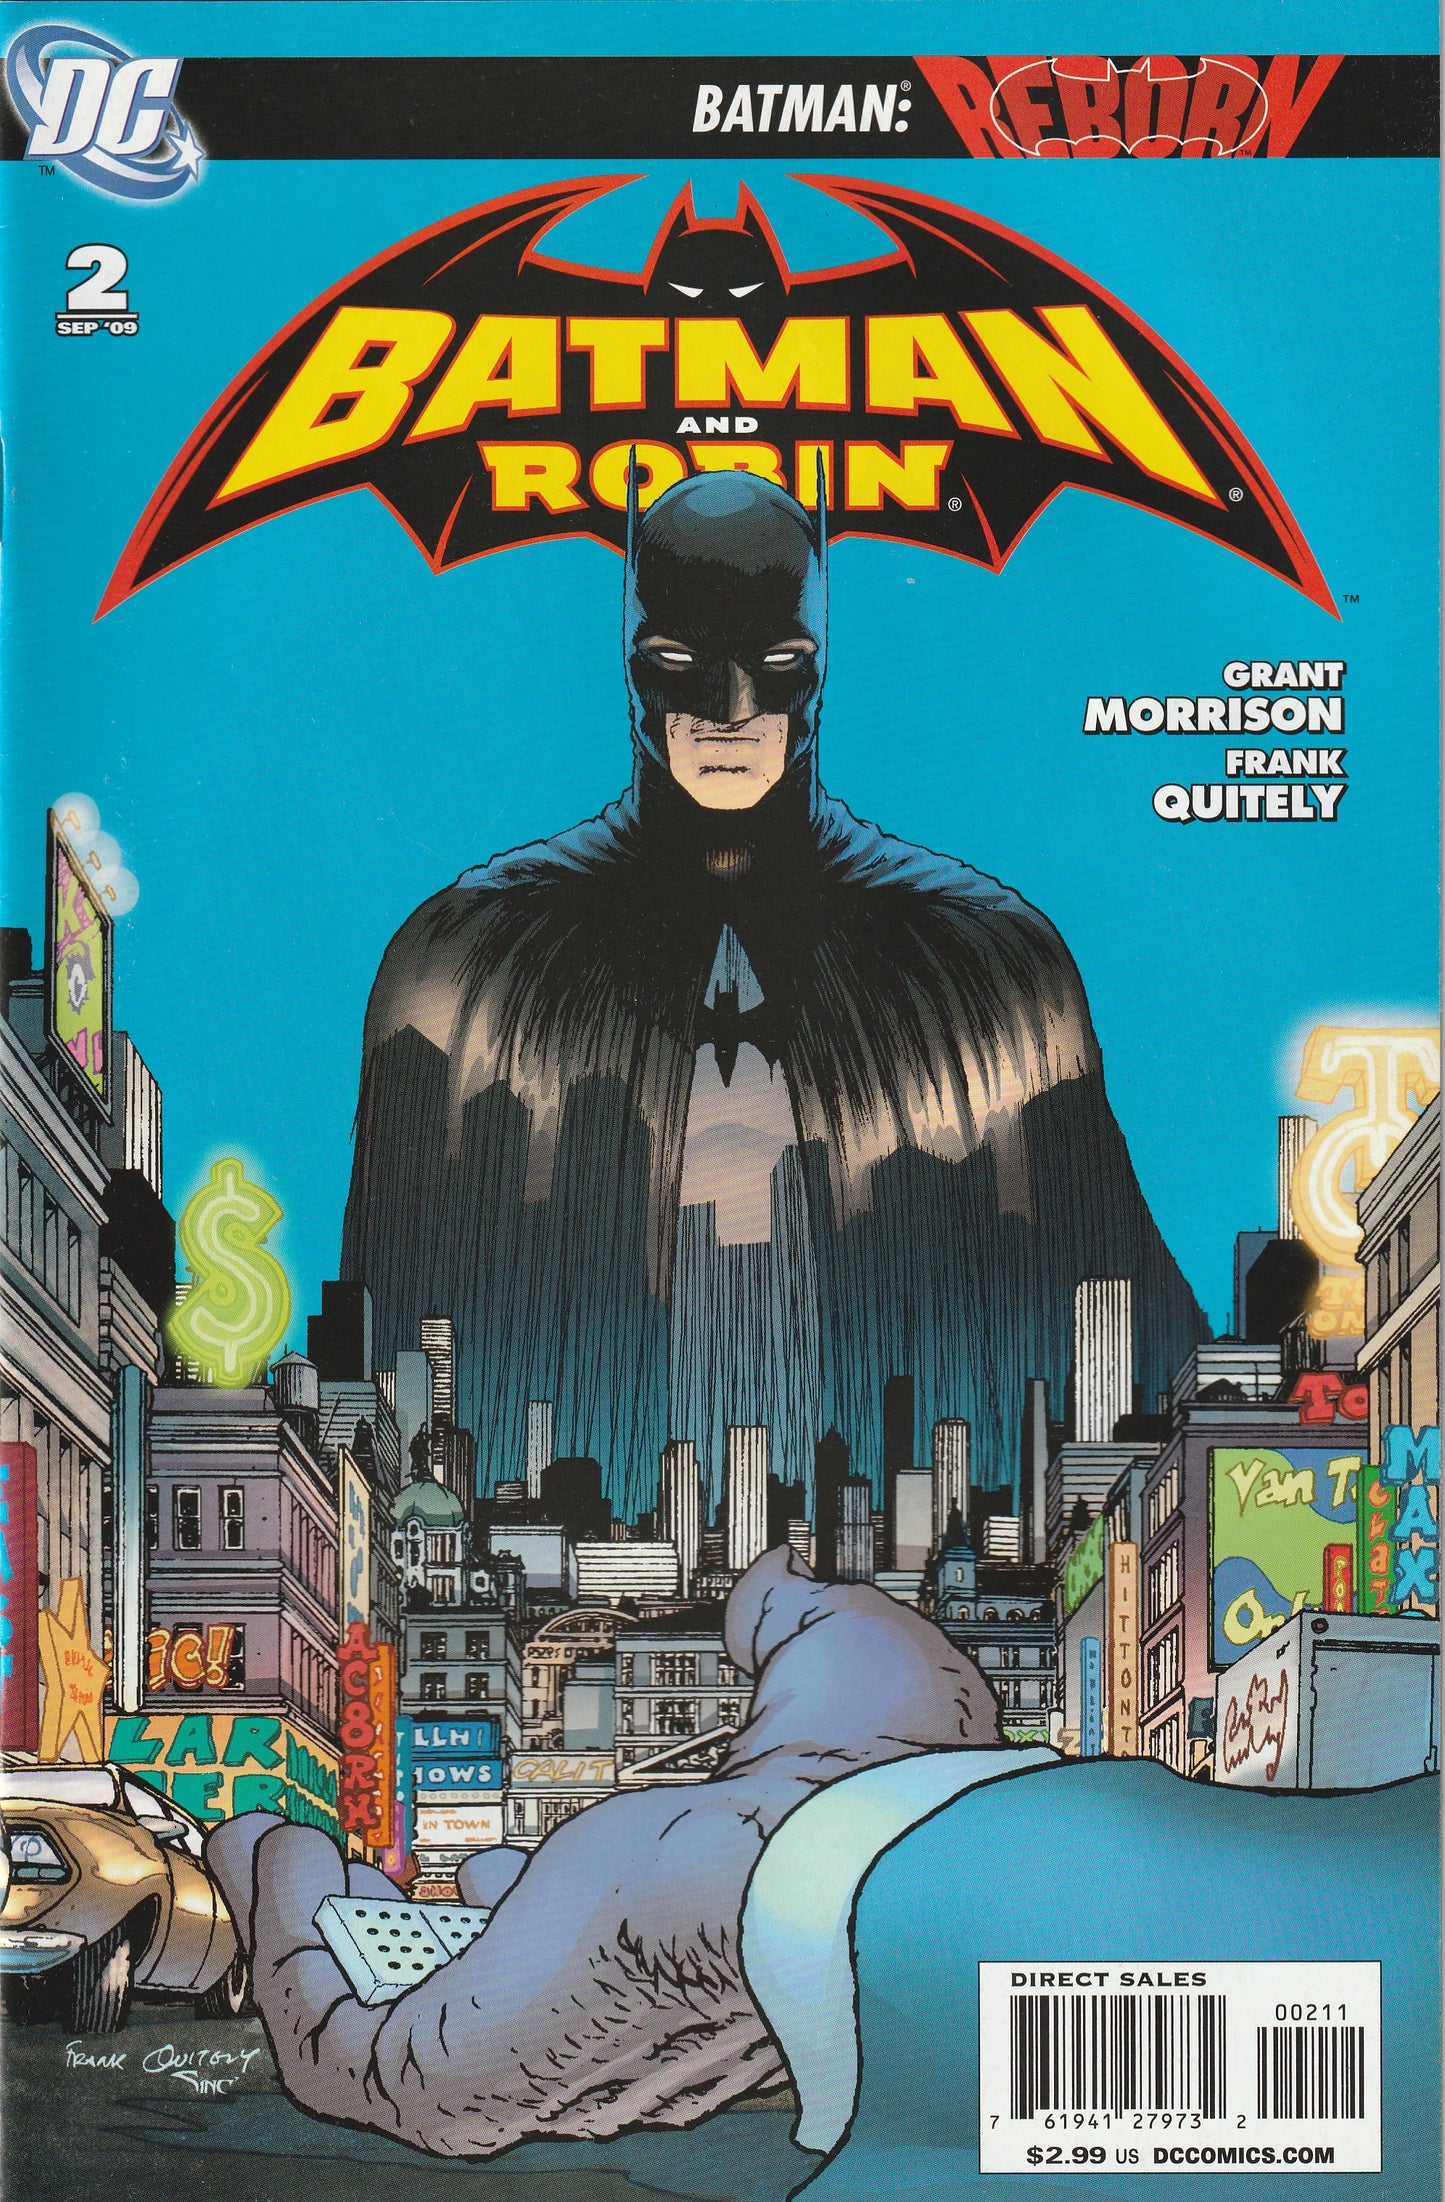 Batman and Robin #2 (2009) - Grant Morrison & Frank Quitely